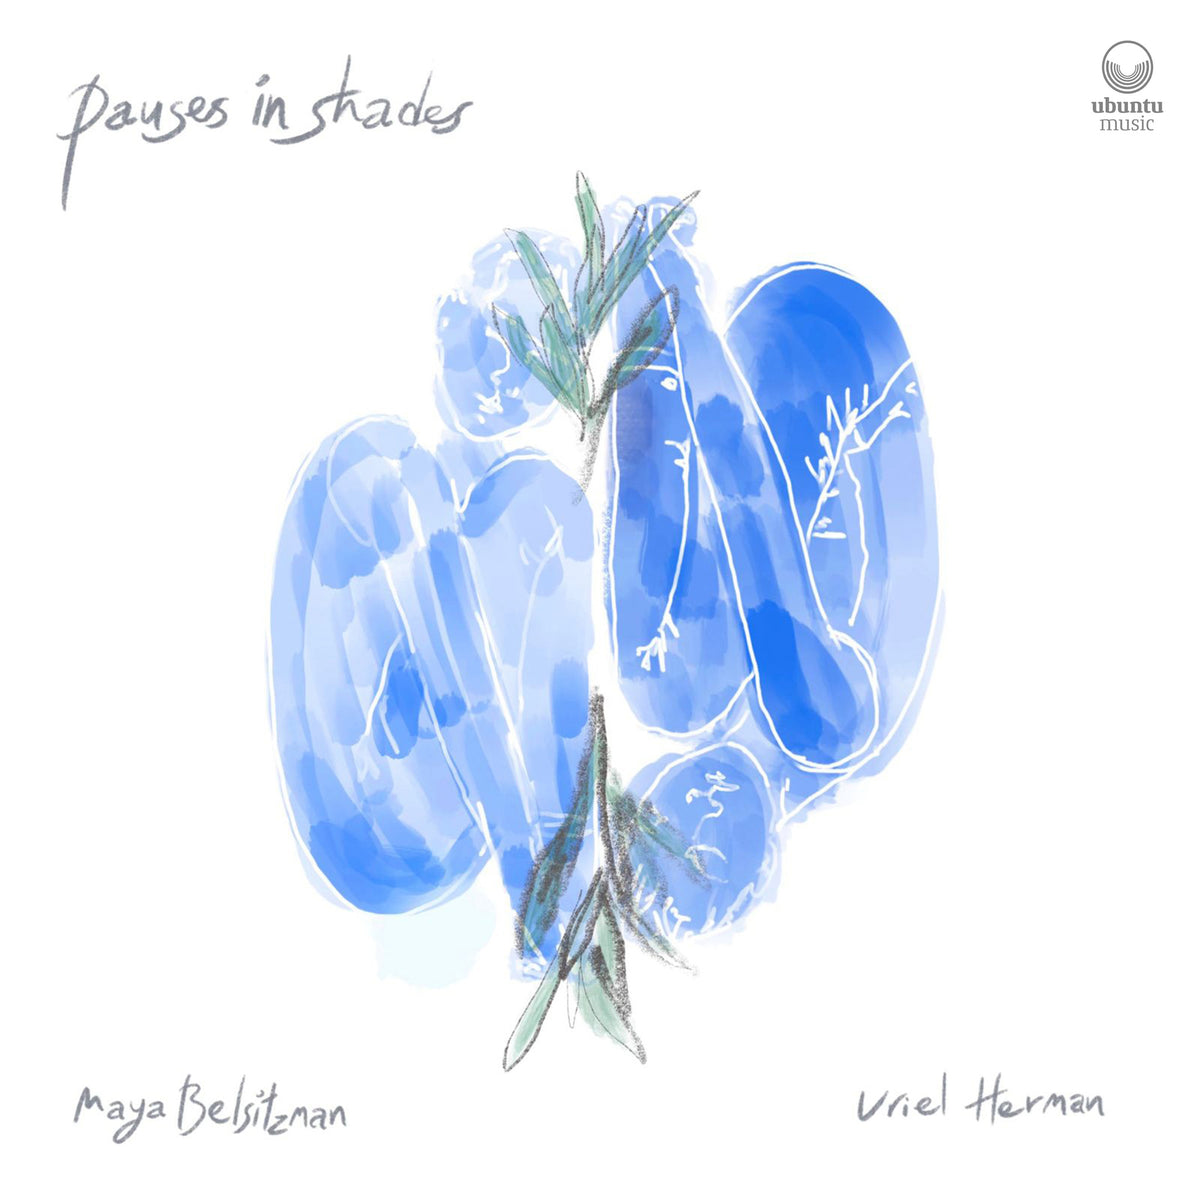 Maya Belsitzman & Uriel Herman - Pauses in Shades - UBU0184CD